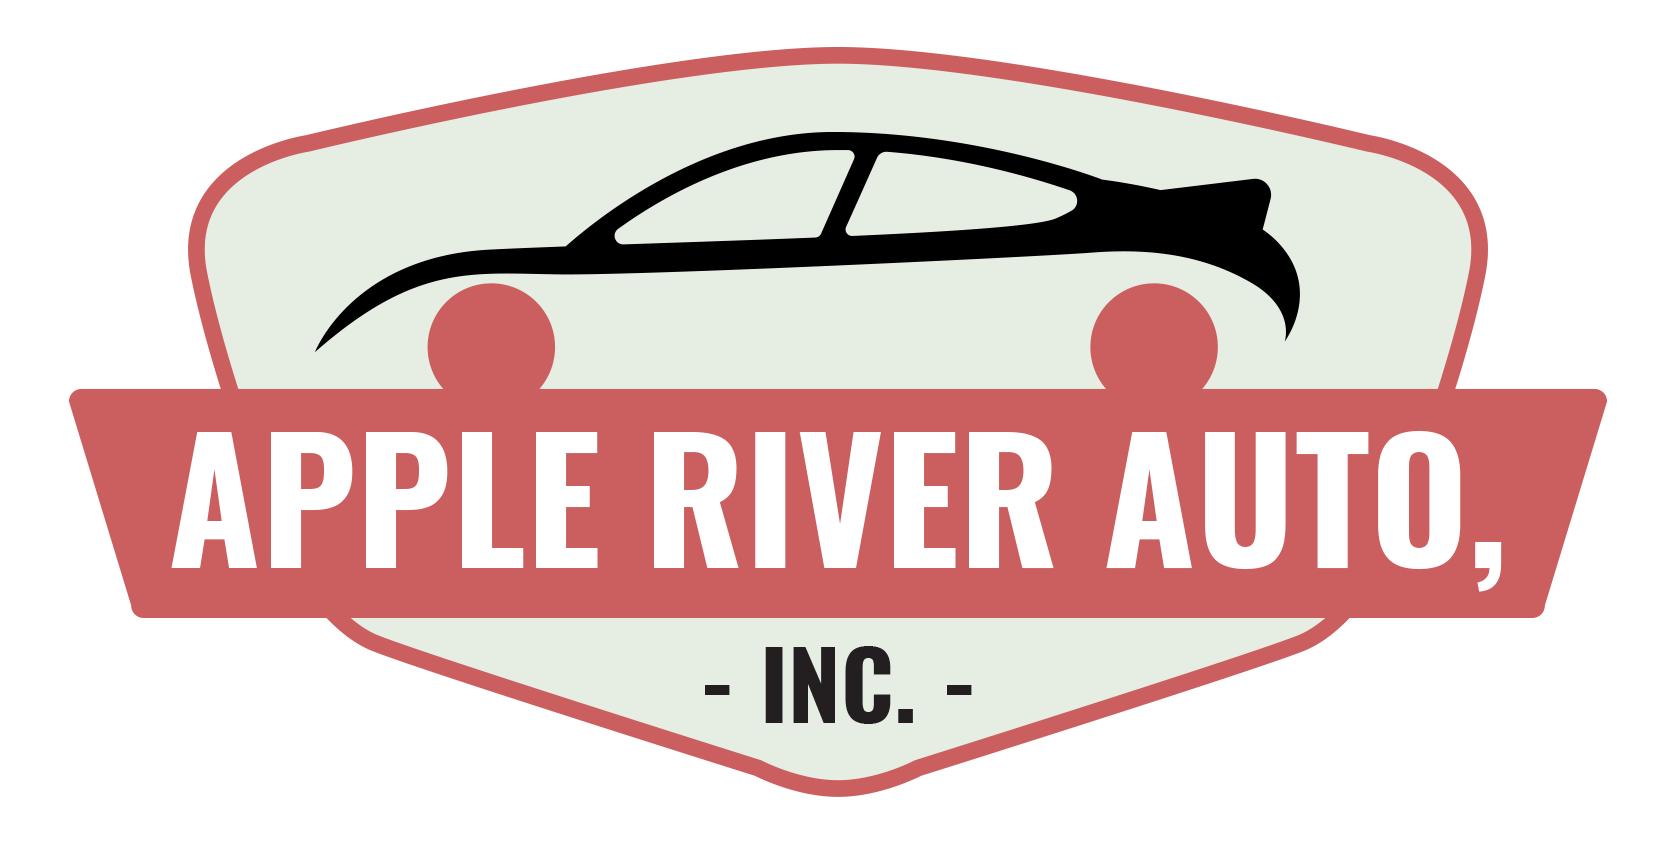 Apple River Auto, Inc.